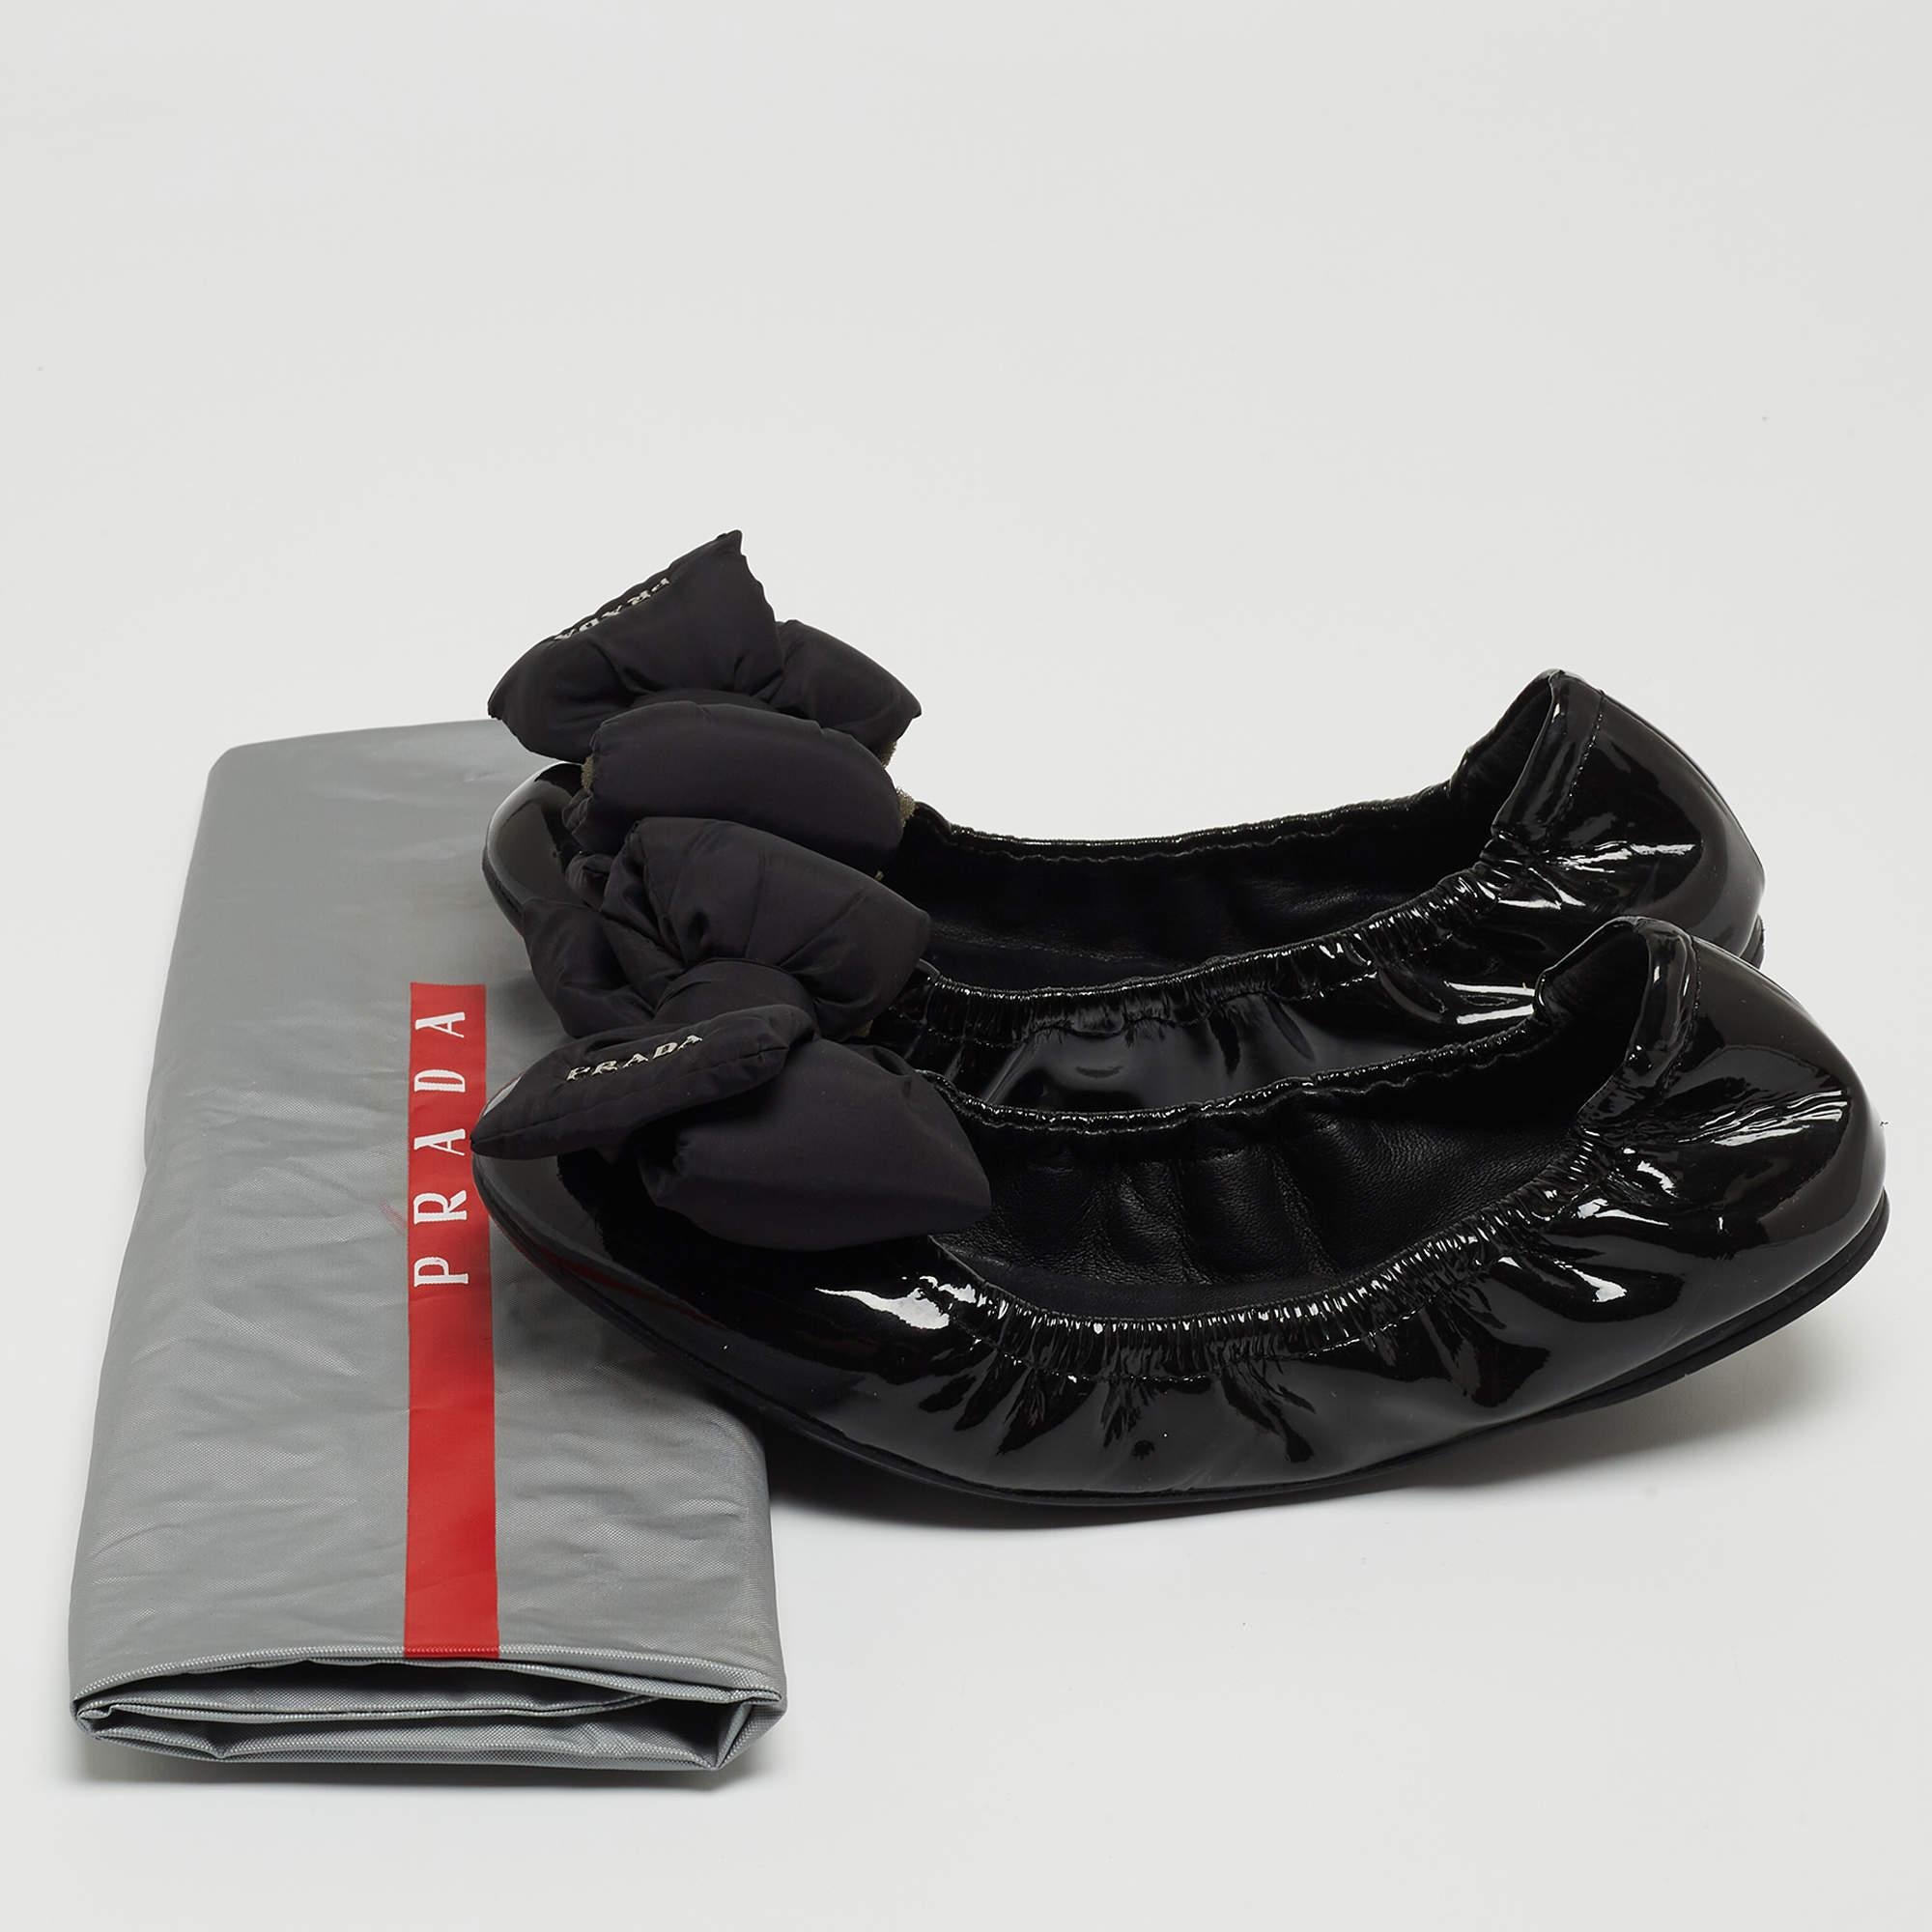 Prada Black Patent Leather Scrunch Ballet Flats Size 36.5 1